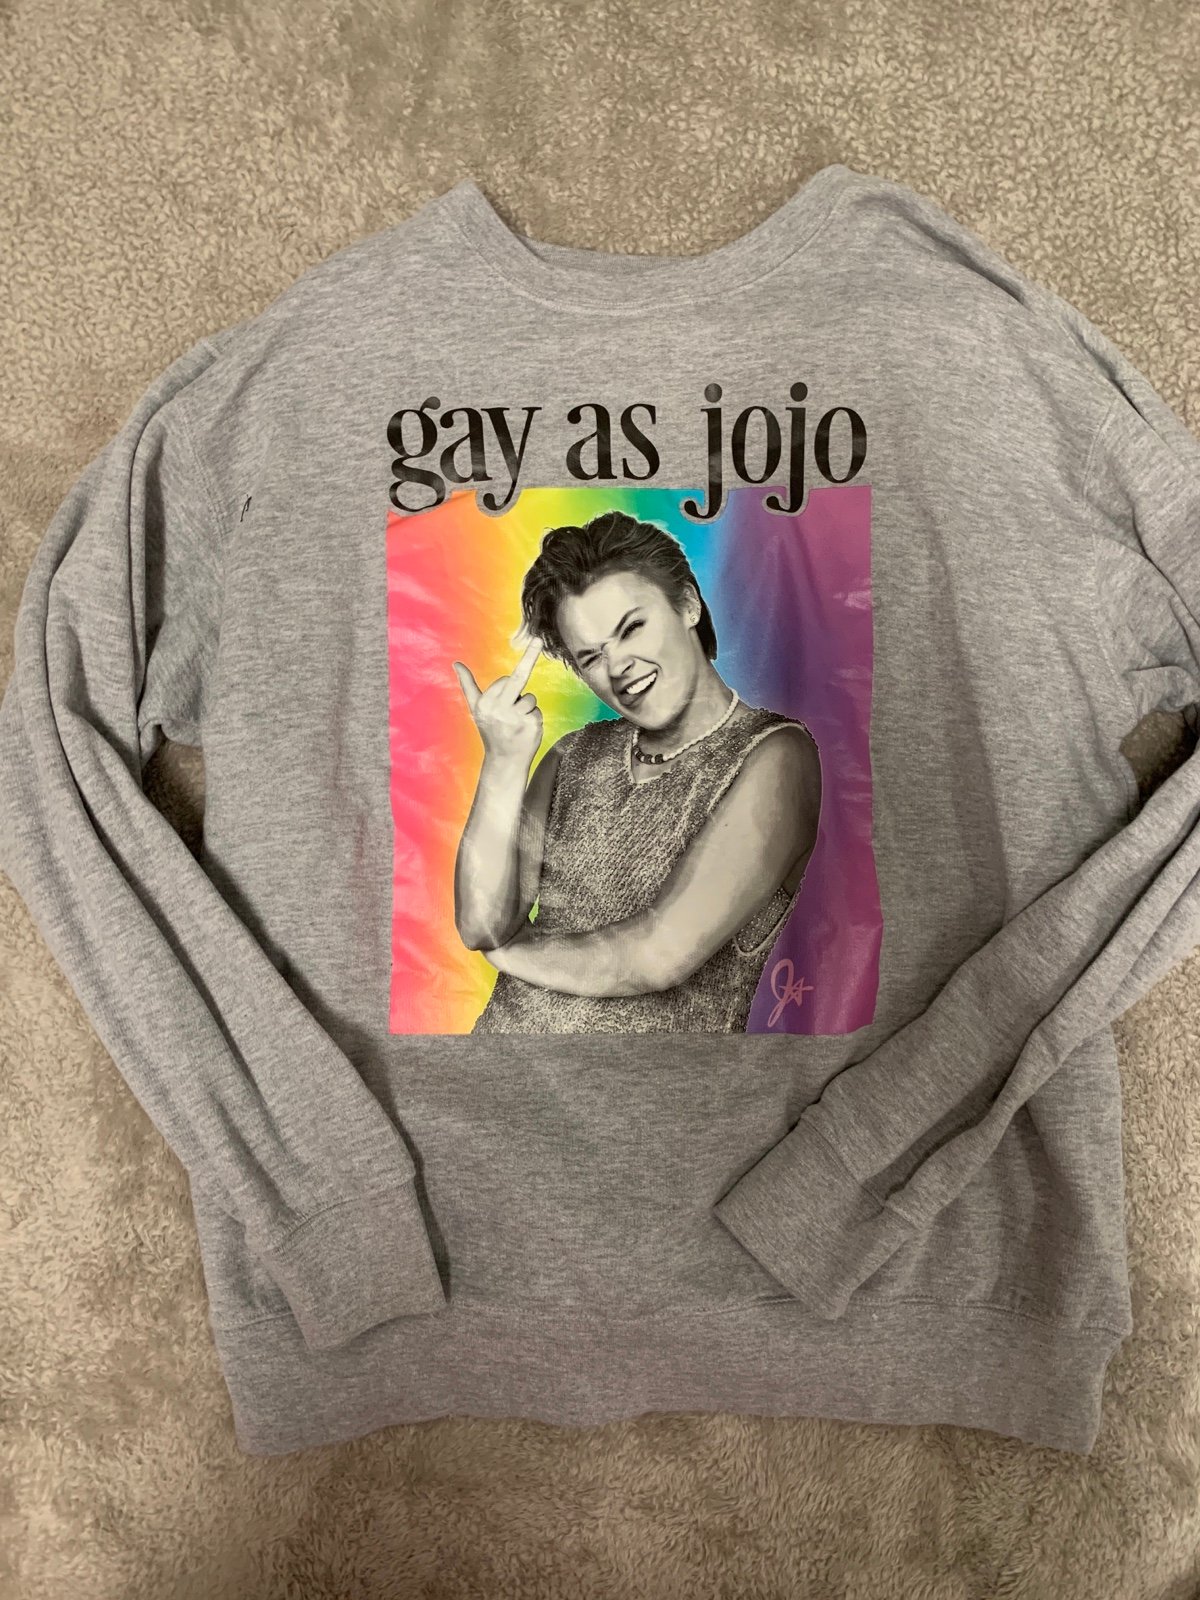 JoJo Siwa “Gay as JoJo” pullover (adult) Size XL AH9qSs